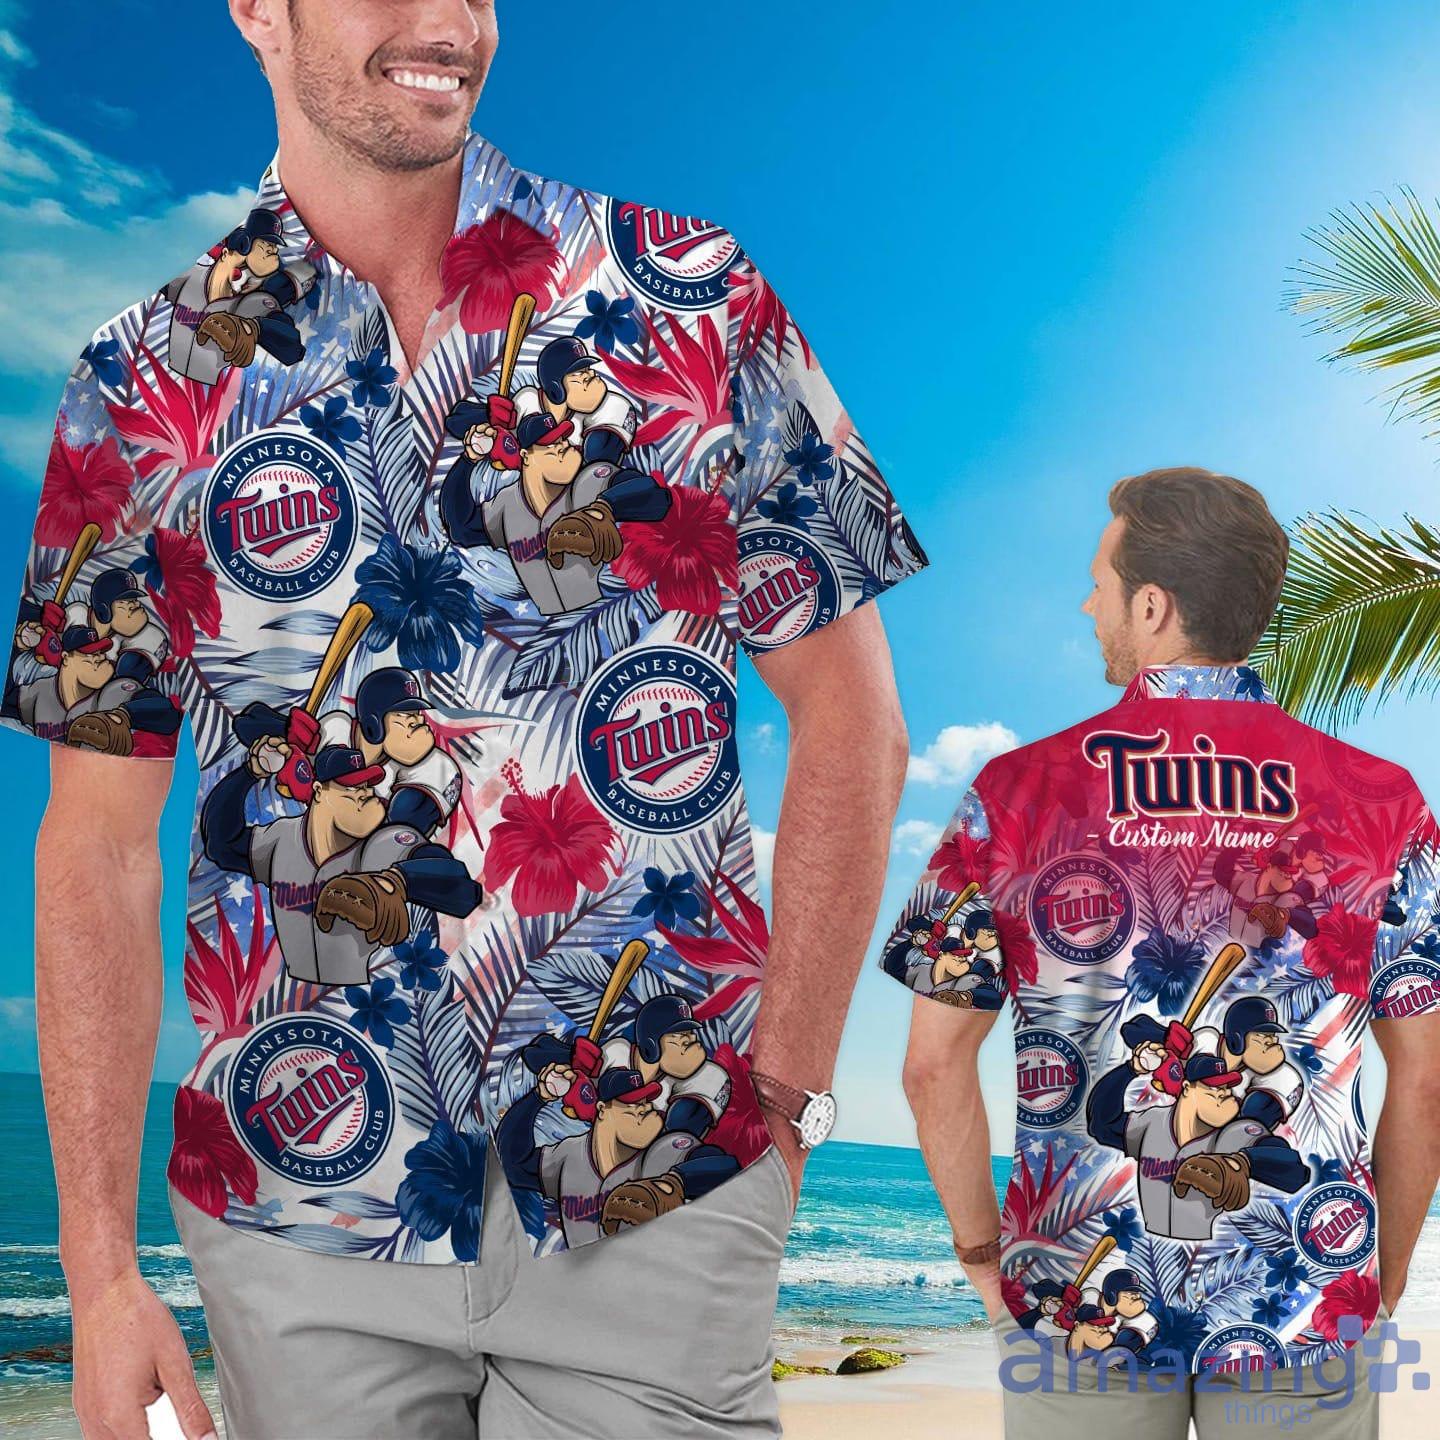 Minnesota Twins Custom Name & Number Baseball Jersey Shirt Best Gift For  Men And Women